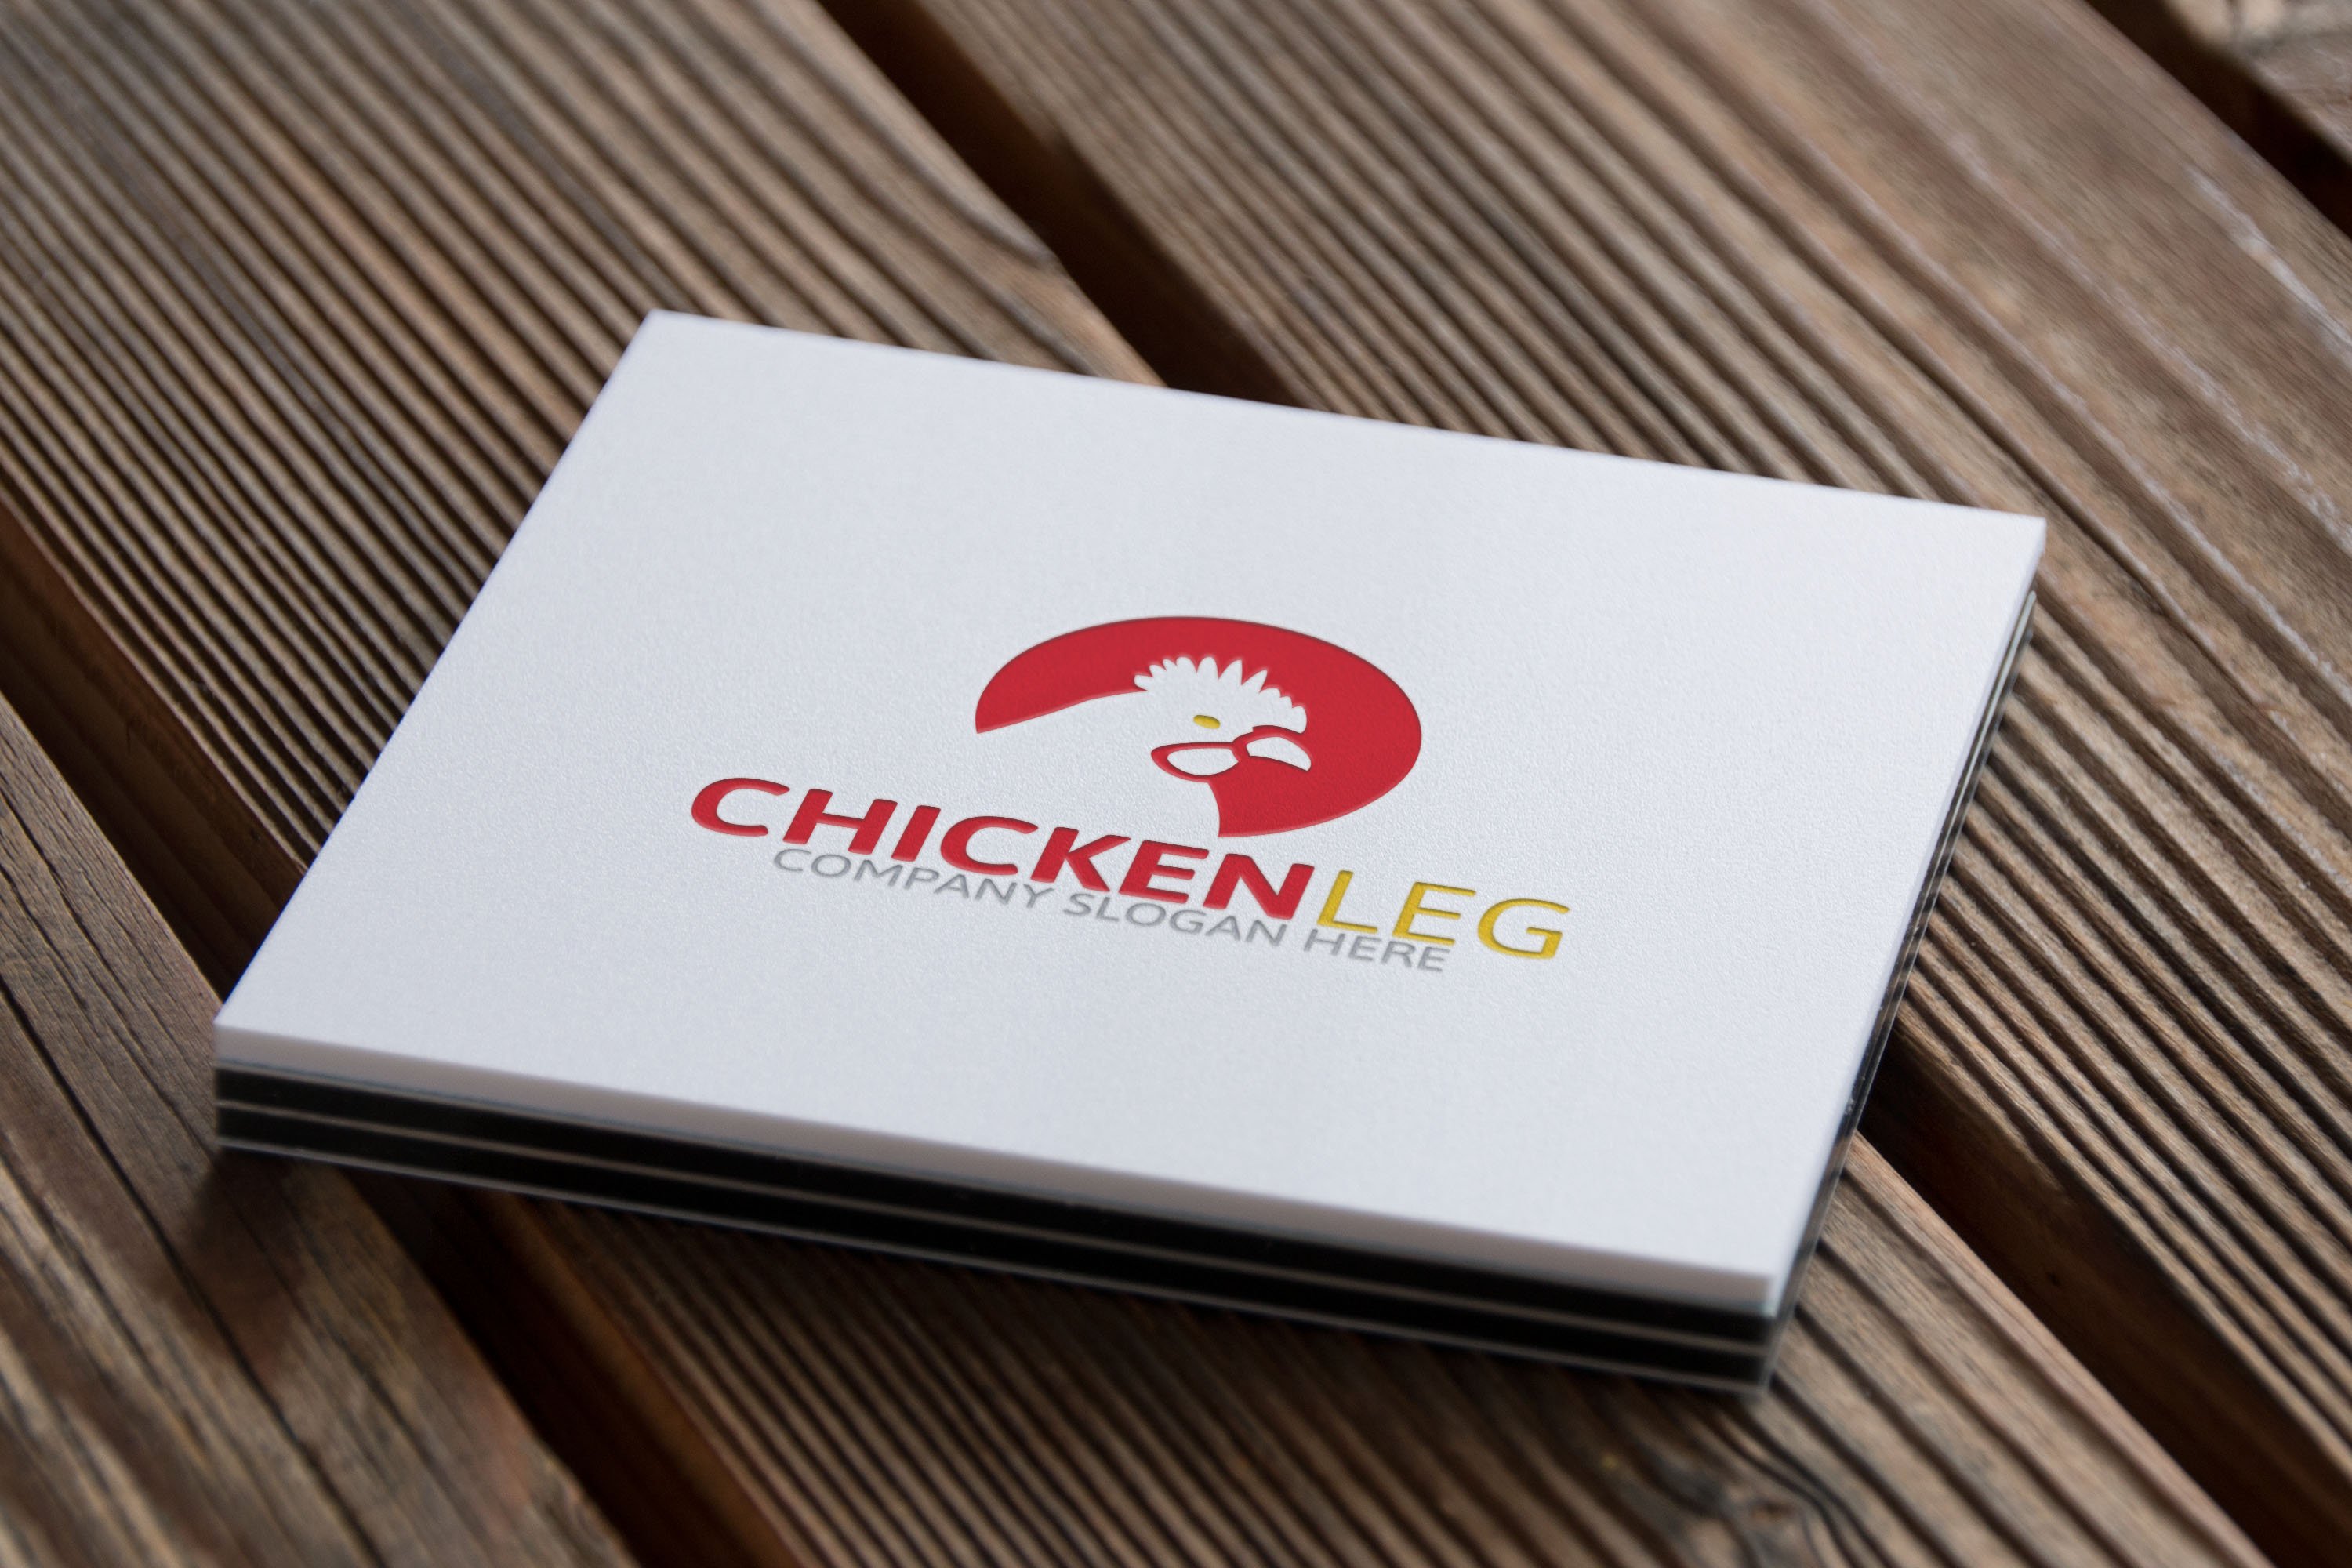 Chicken Leg Logo cover image.